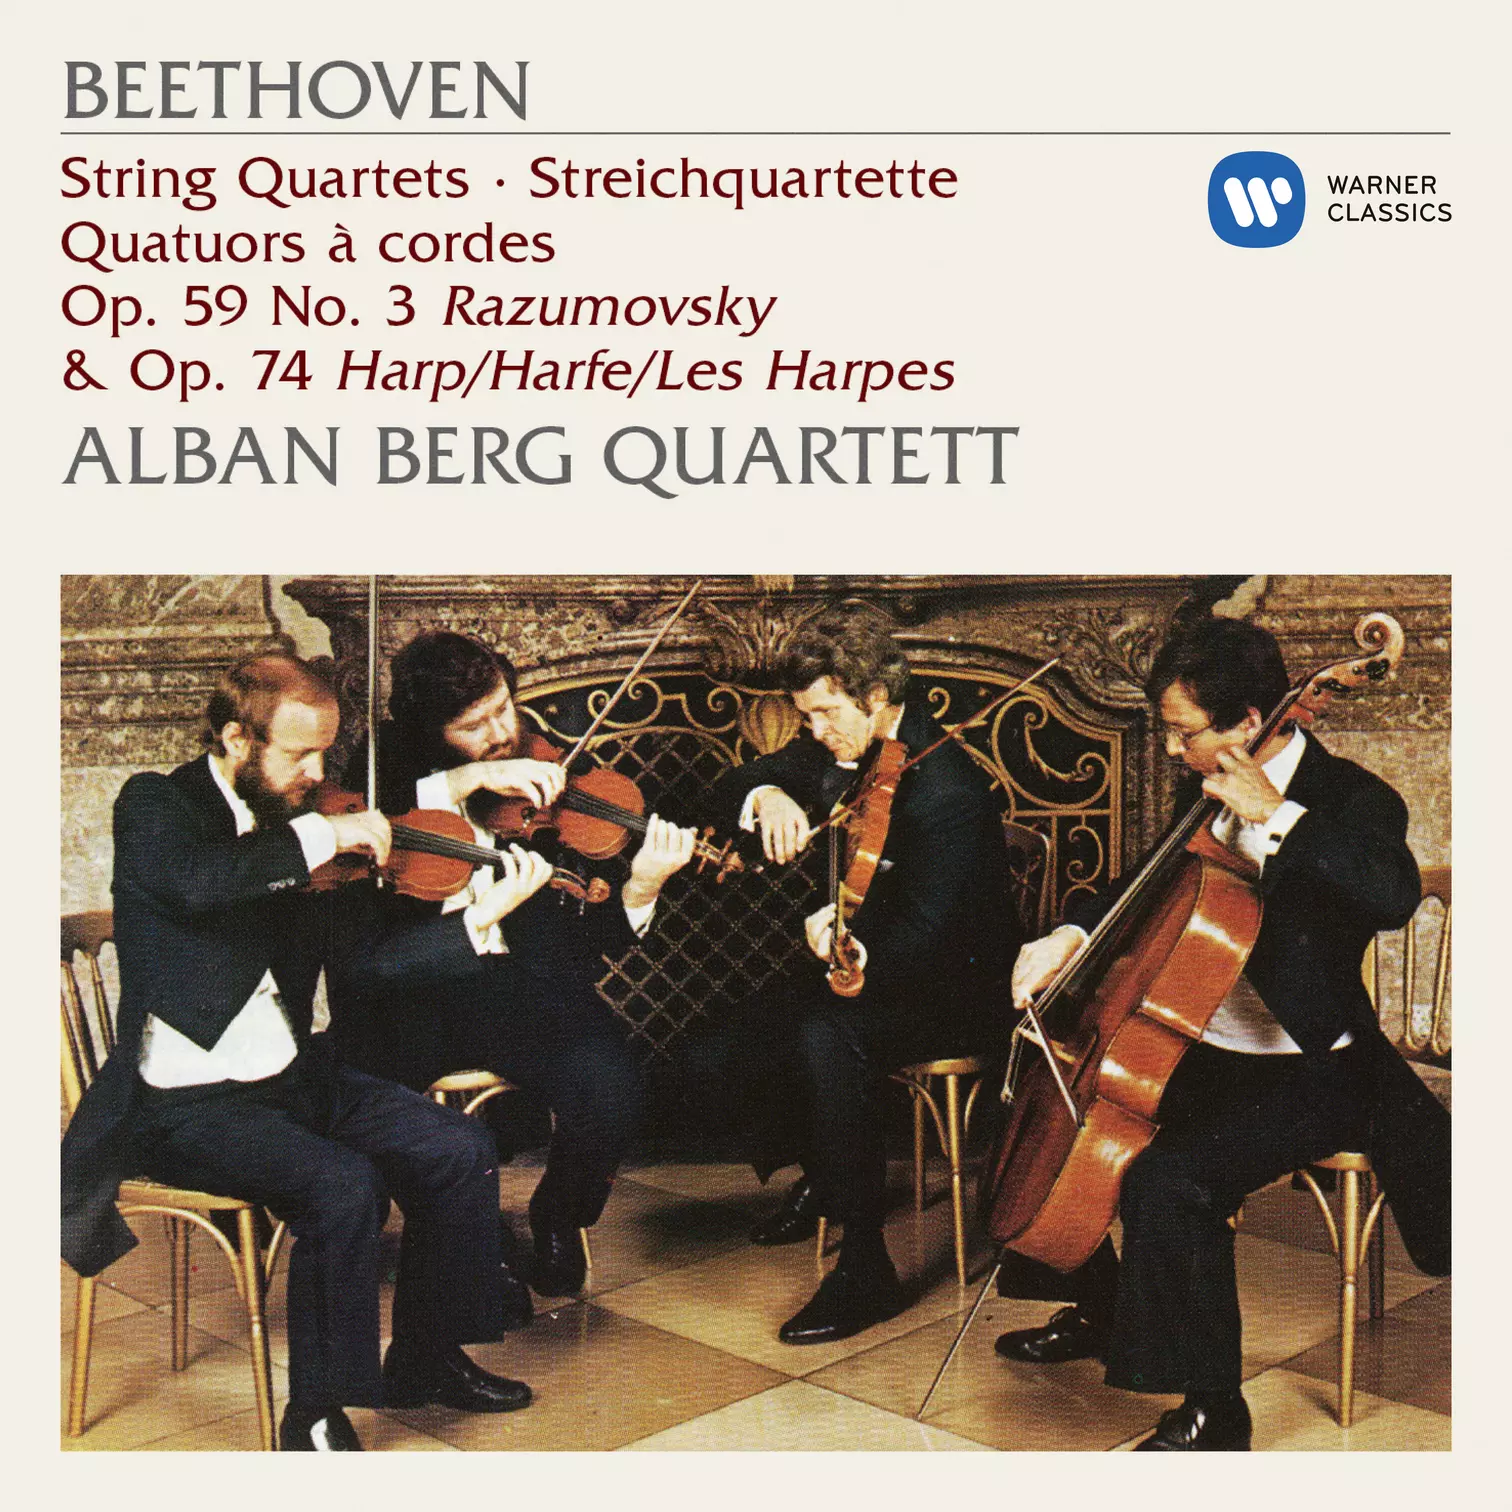 Beethoven: String Quartets, Op. 59 No. 3 “Razumovsky” & 74 “Harp”